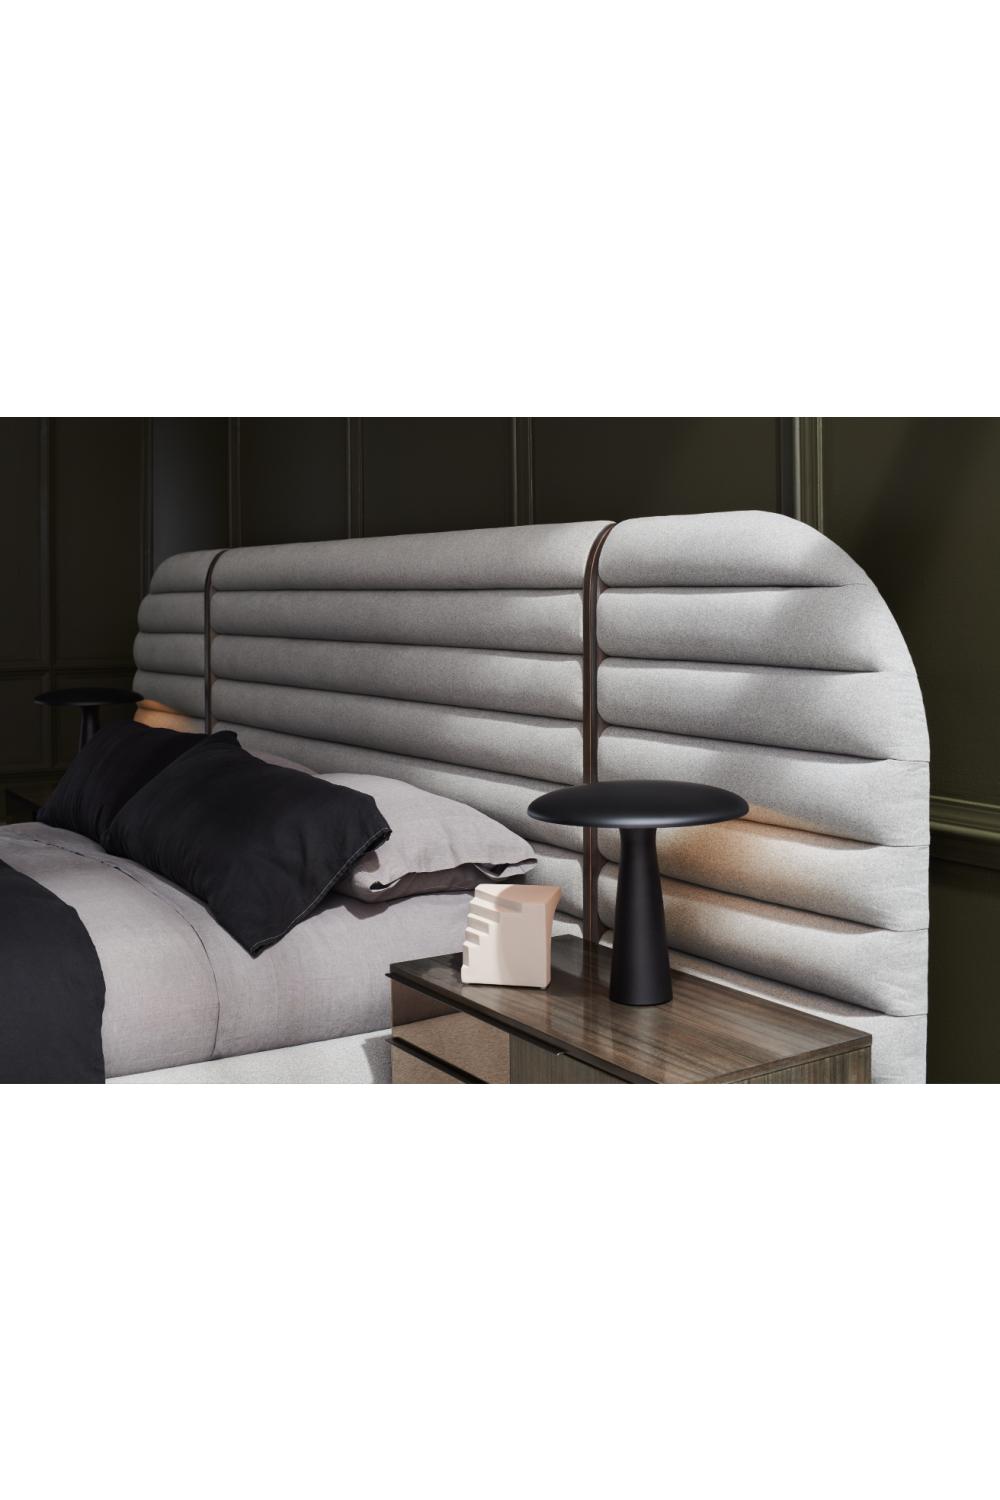 Channel-Tufted Bed Panels California King Bed | Caracole La Moda | Oroa.com